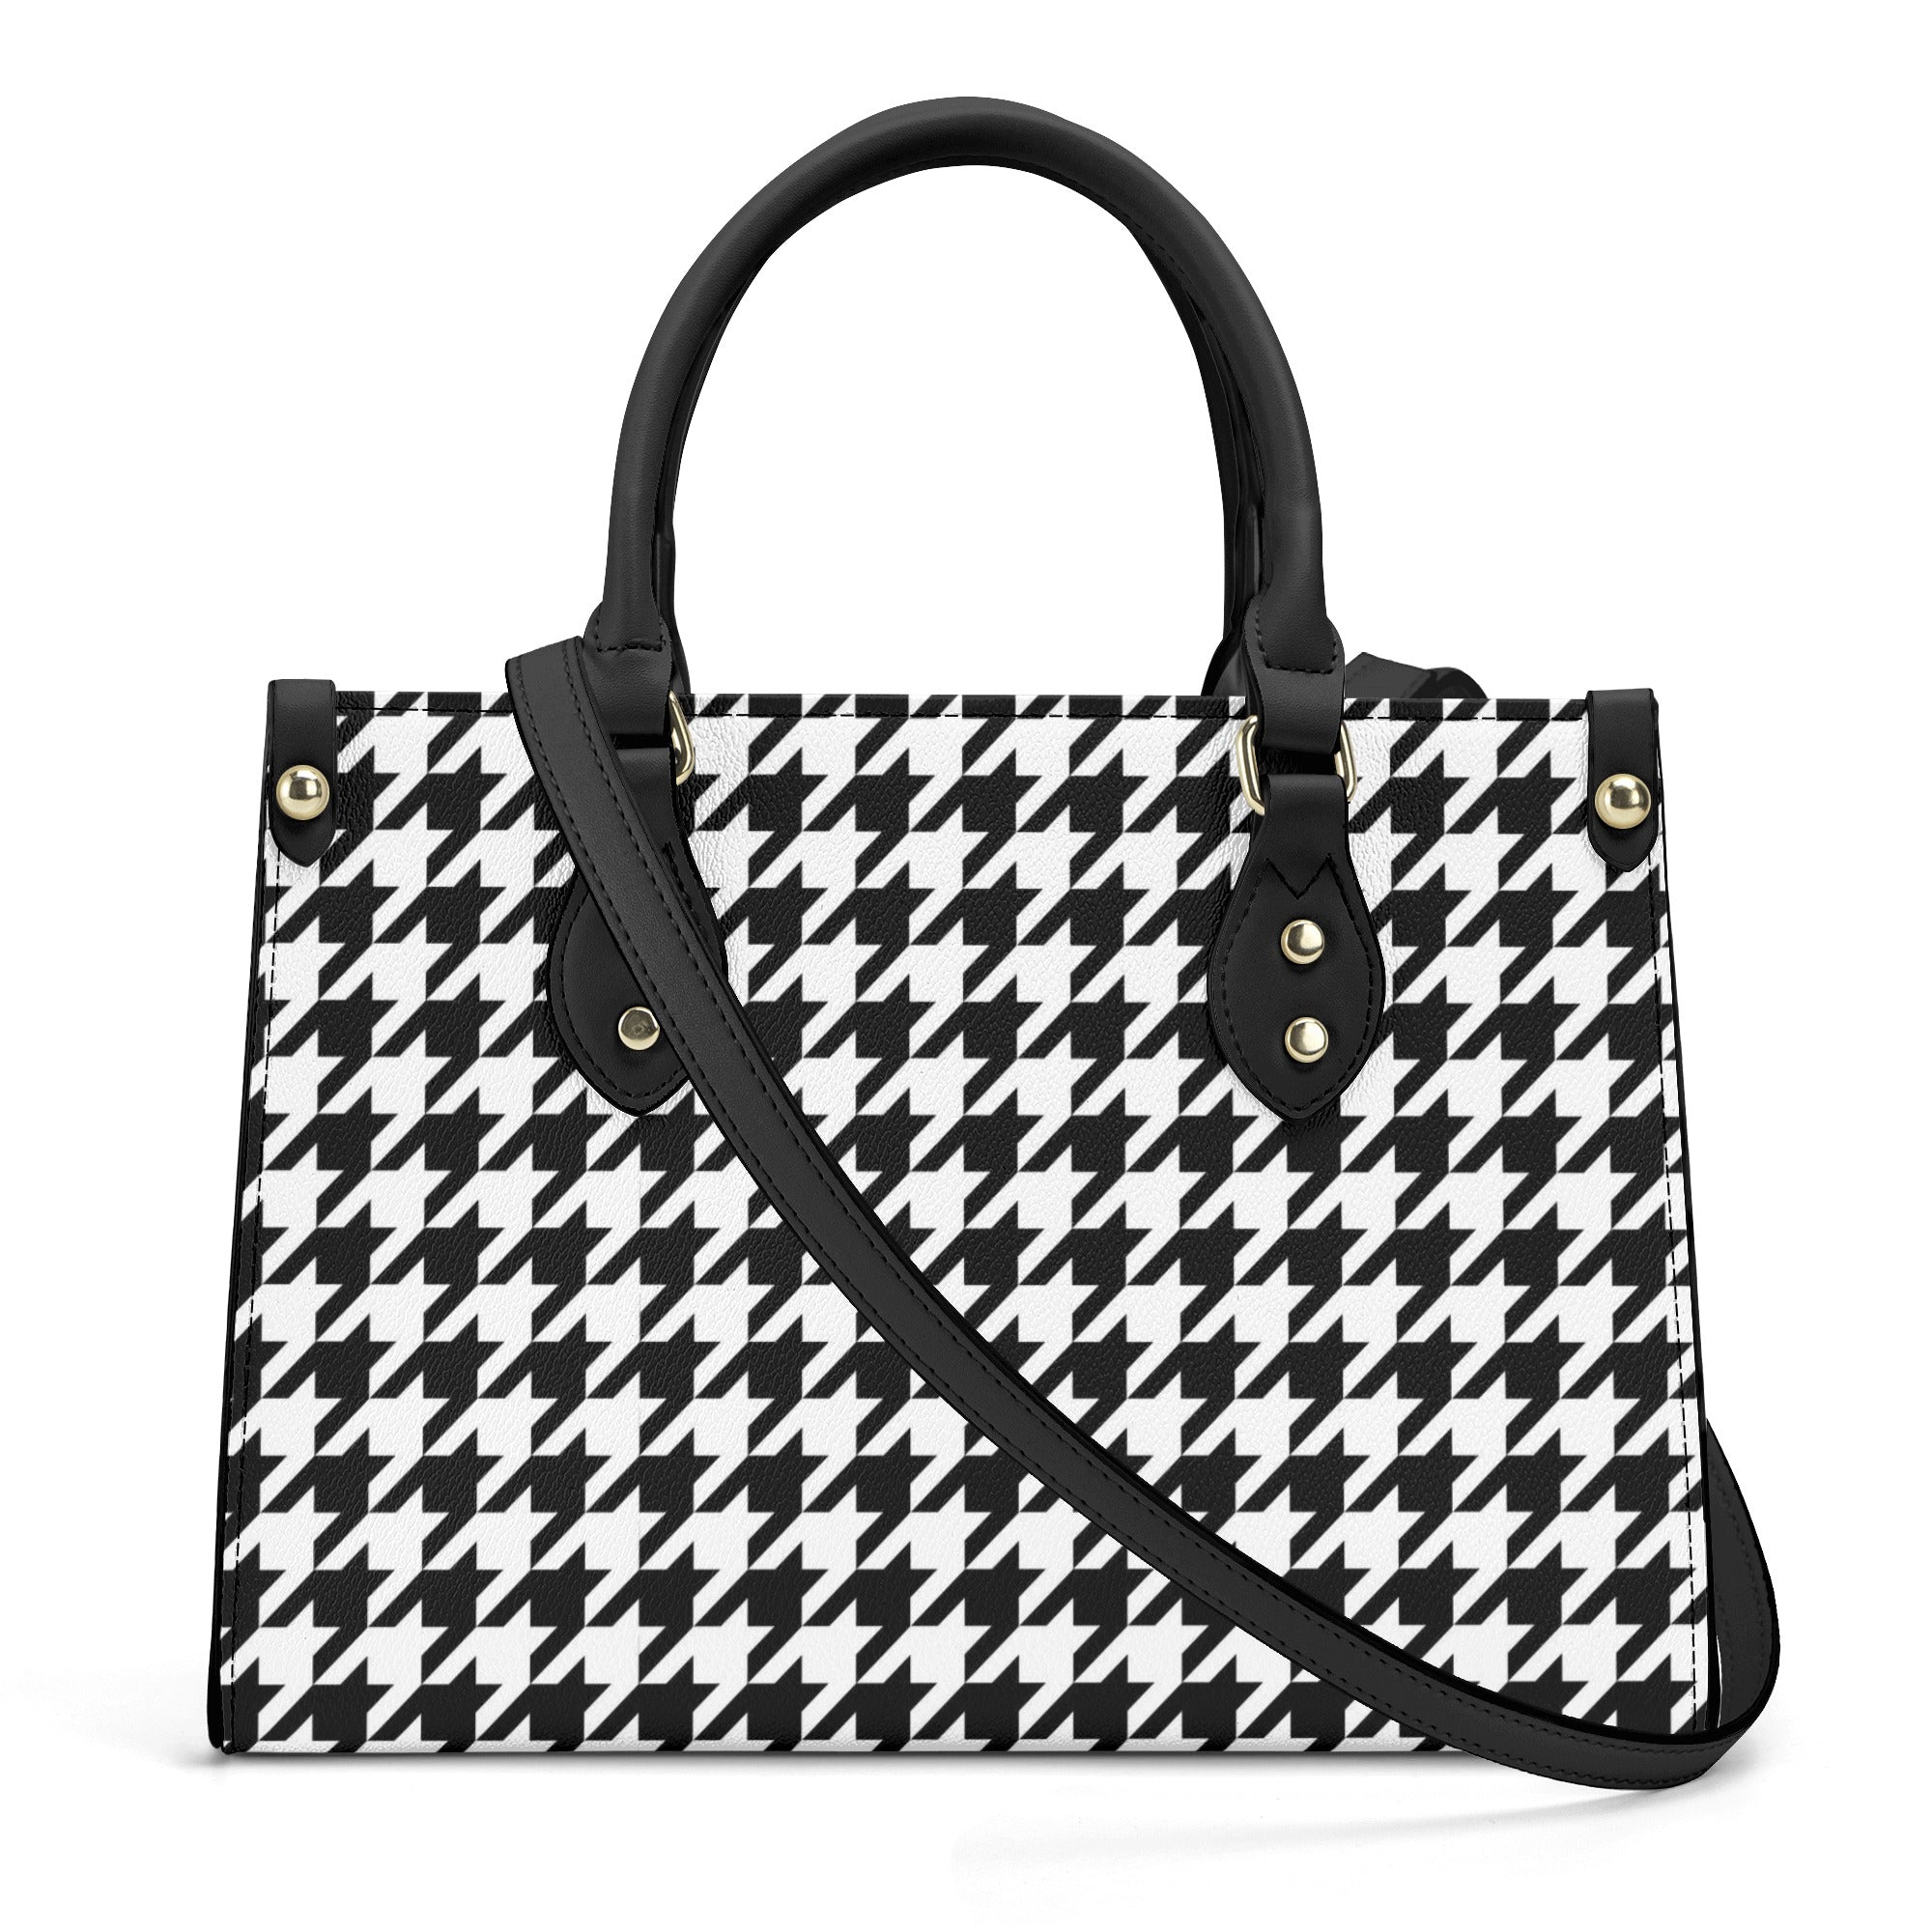 Amazon.com: Oct17 Women Tote Bag - Tassels Faux Leather Shoulder Handbags,  Fashion Ladies Purses Satchel Messenger Bags - Beige : Clothing, Shoes &  Jewelry